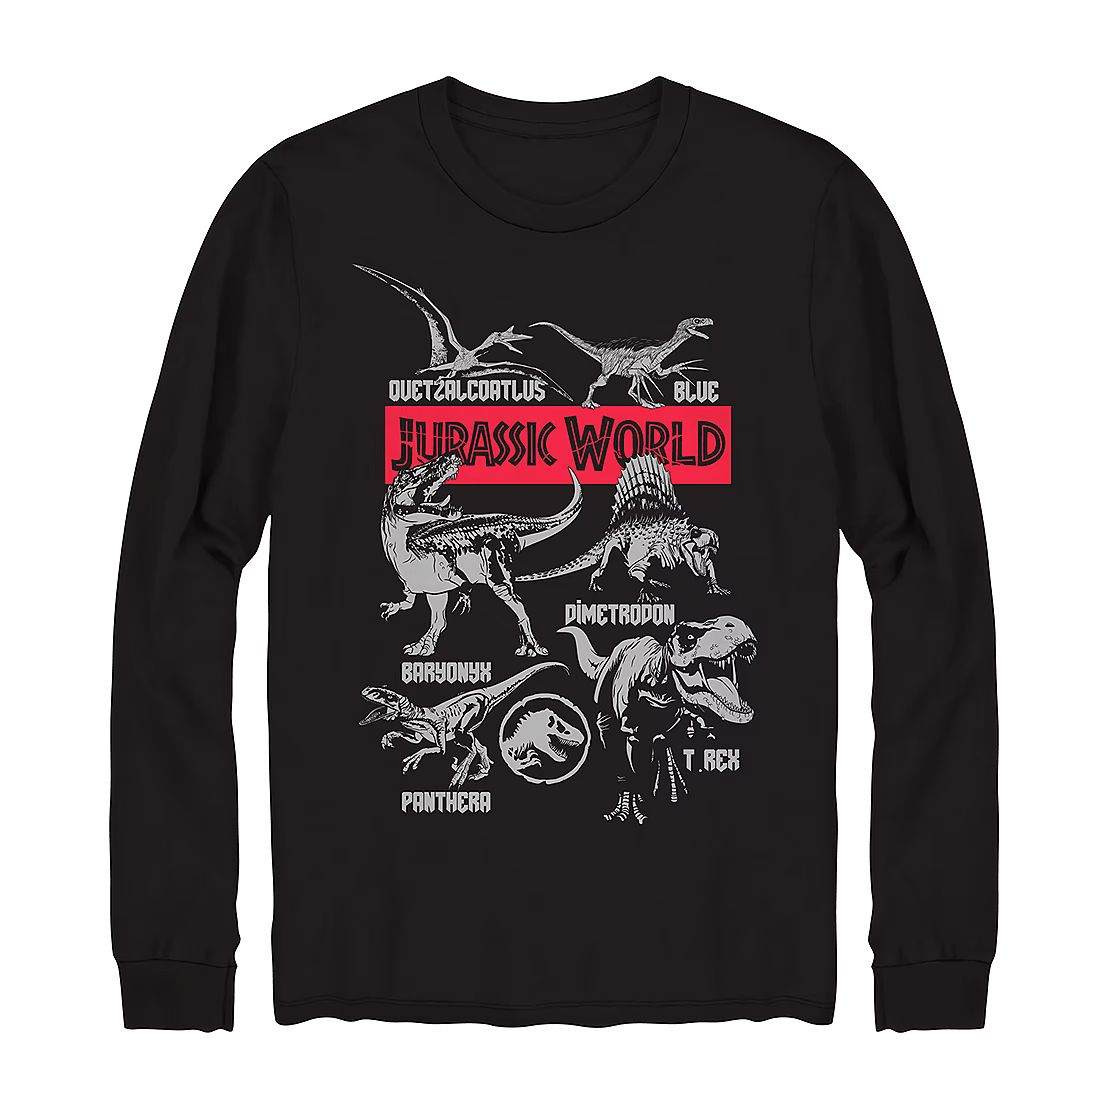 Little & Big Boys Crew Neck Jurassic World Long Sleeve Graphic T-Shirt | JCPenney